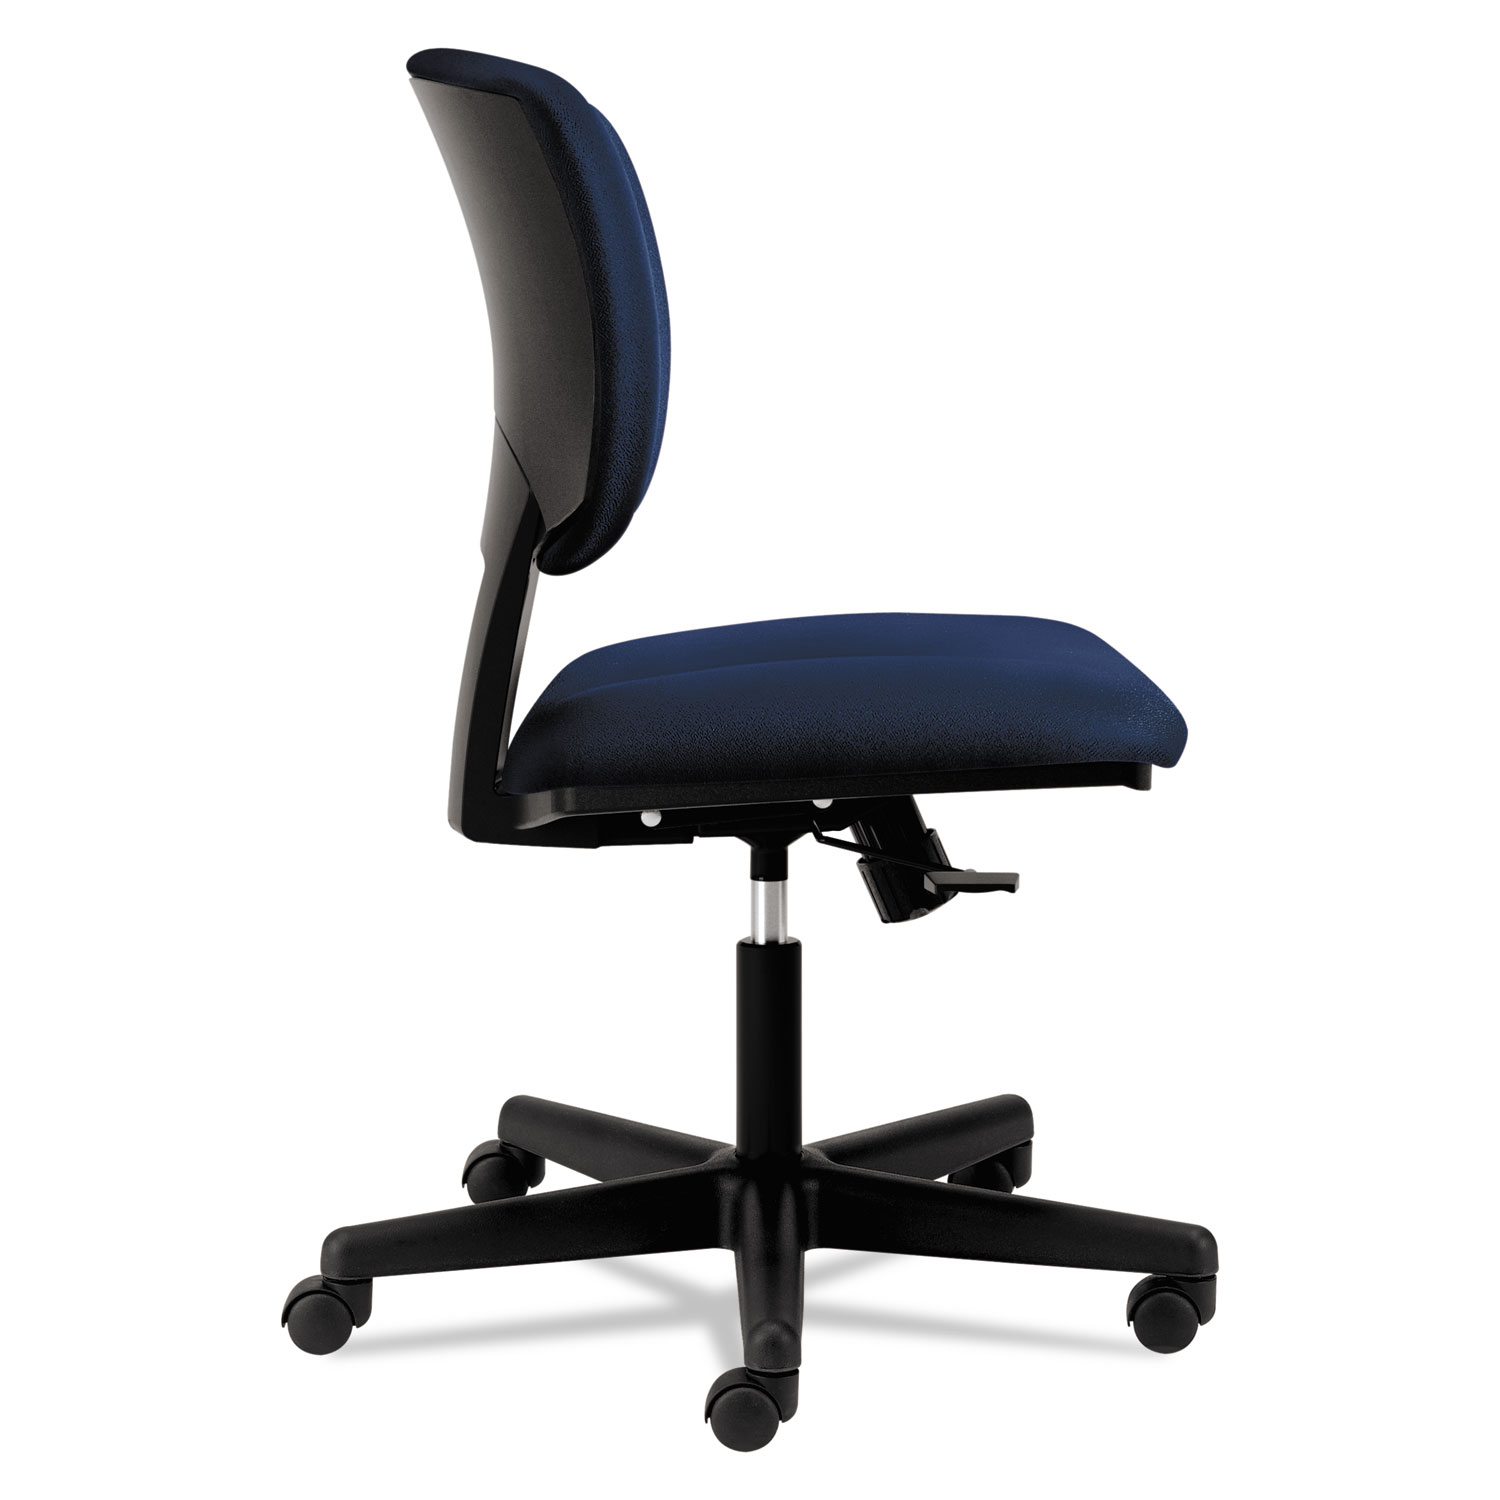 Volt Series Task Chair with Synchro-Tilt, Navy Fabric